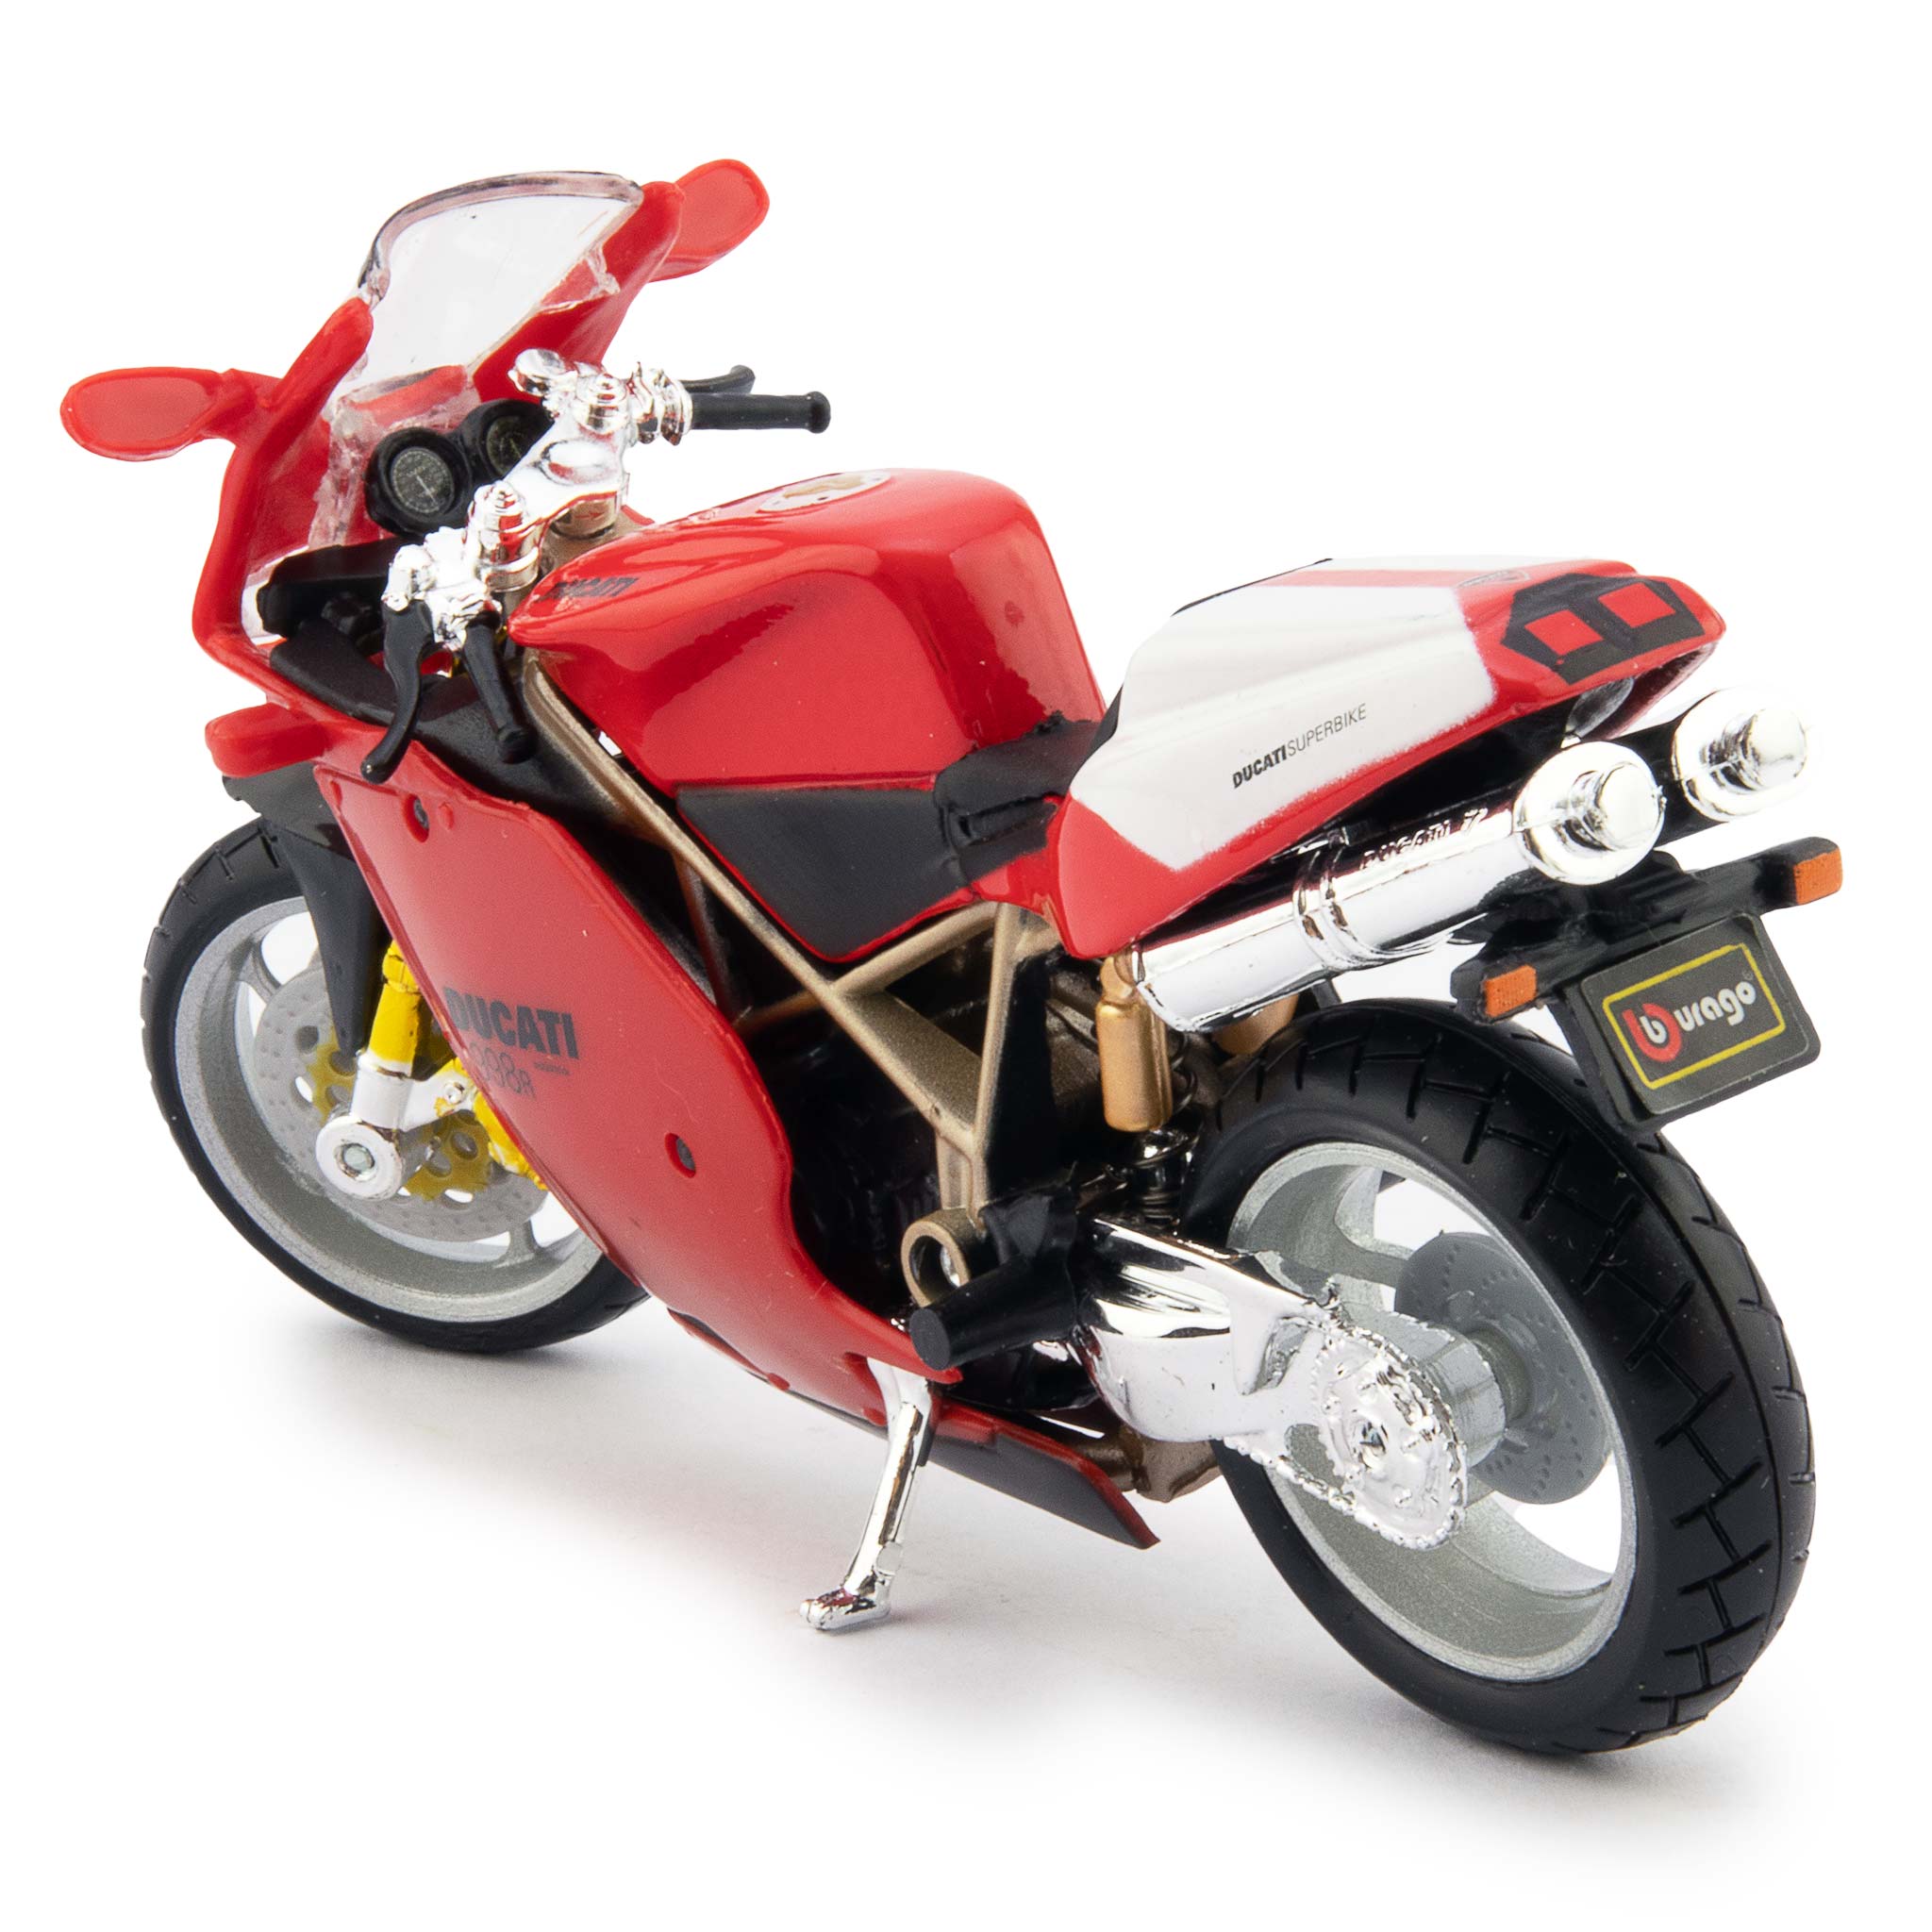 Ducati 998R Diecast Model Motorcycle red - 1:18 Scale-Bburago-Diecast Model Centre